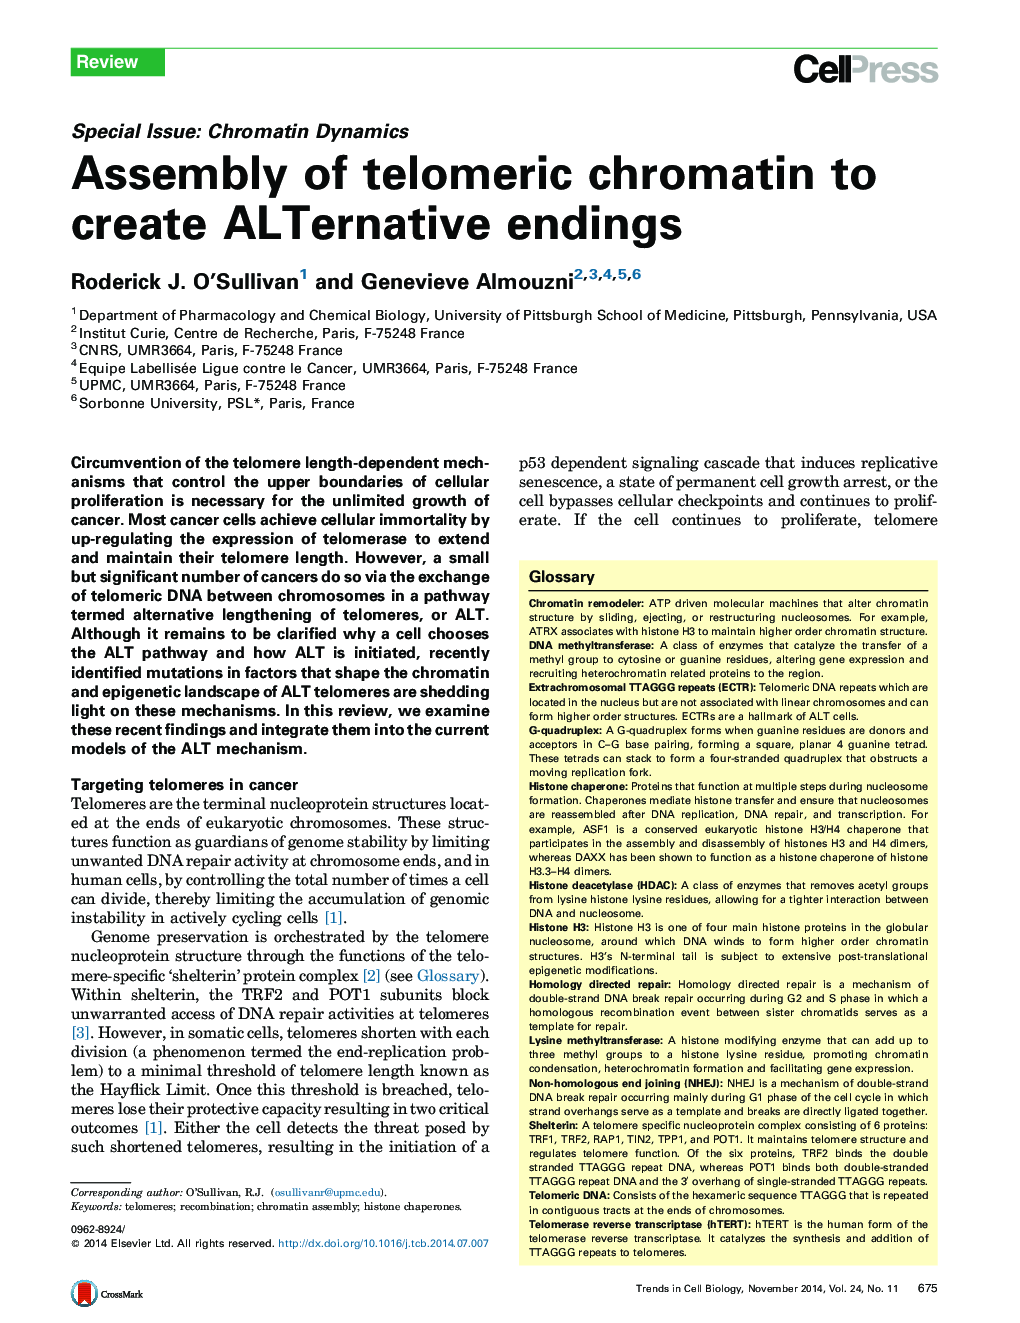 Assembly of telomeric chromatin to create ALTernative endings